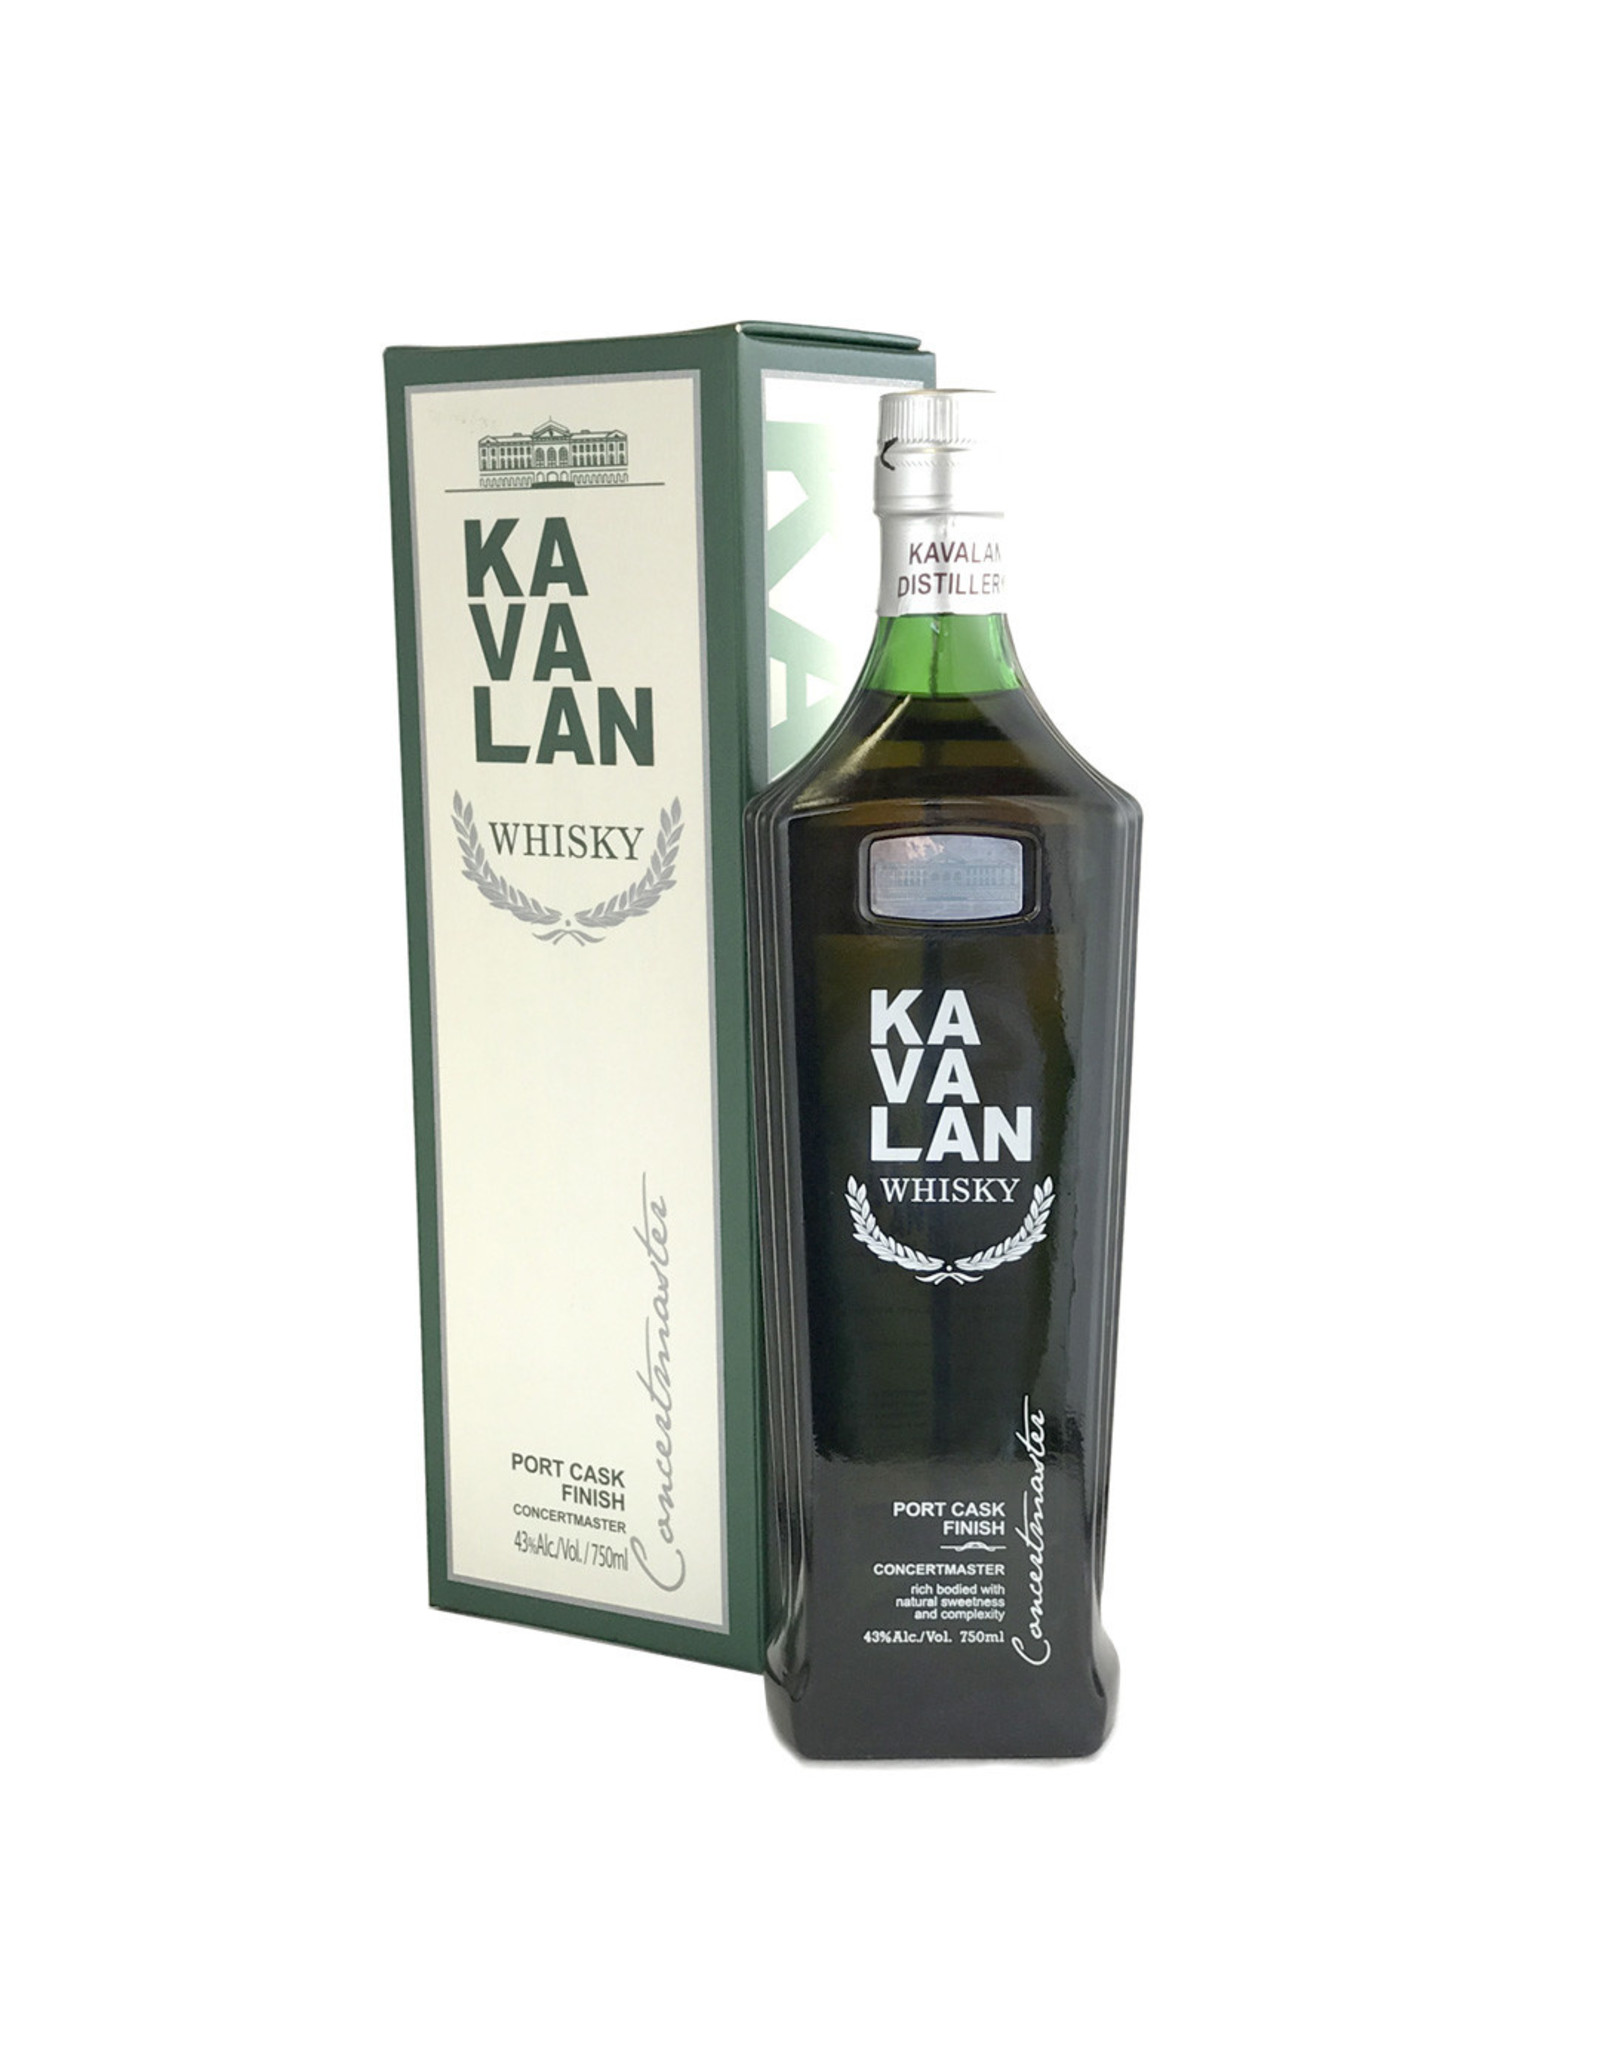 Concertmaster Cask Spirits Port Wine Kavalan Malt Shop Taiwan Finish Whisky, & - Single Bacchus